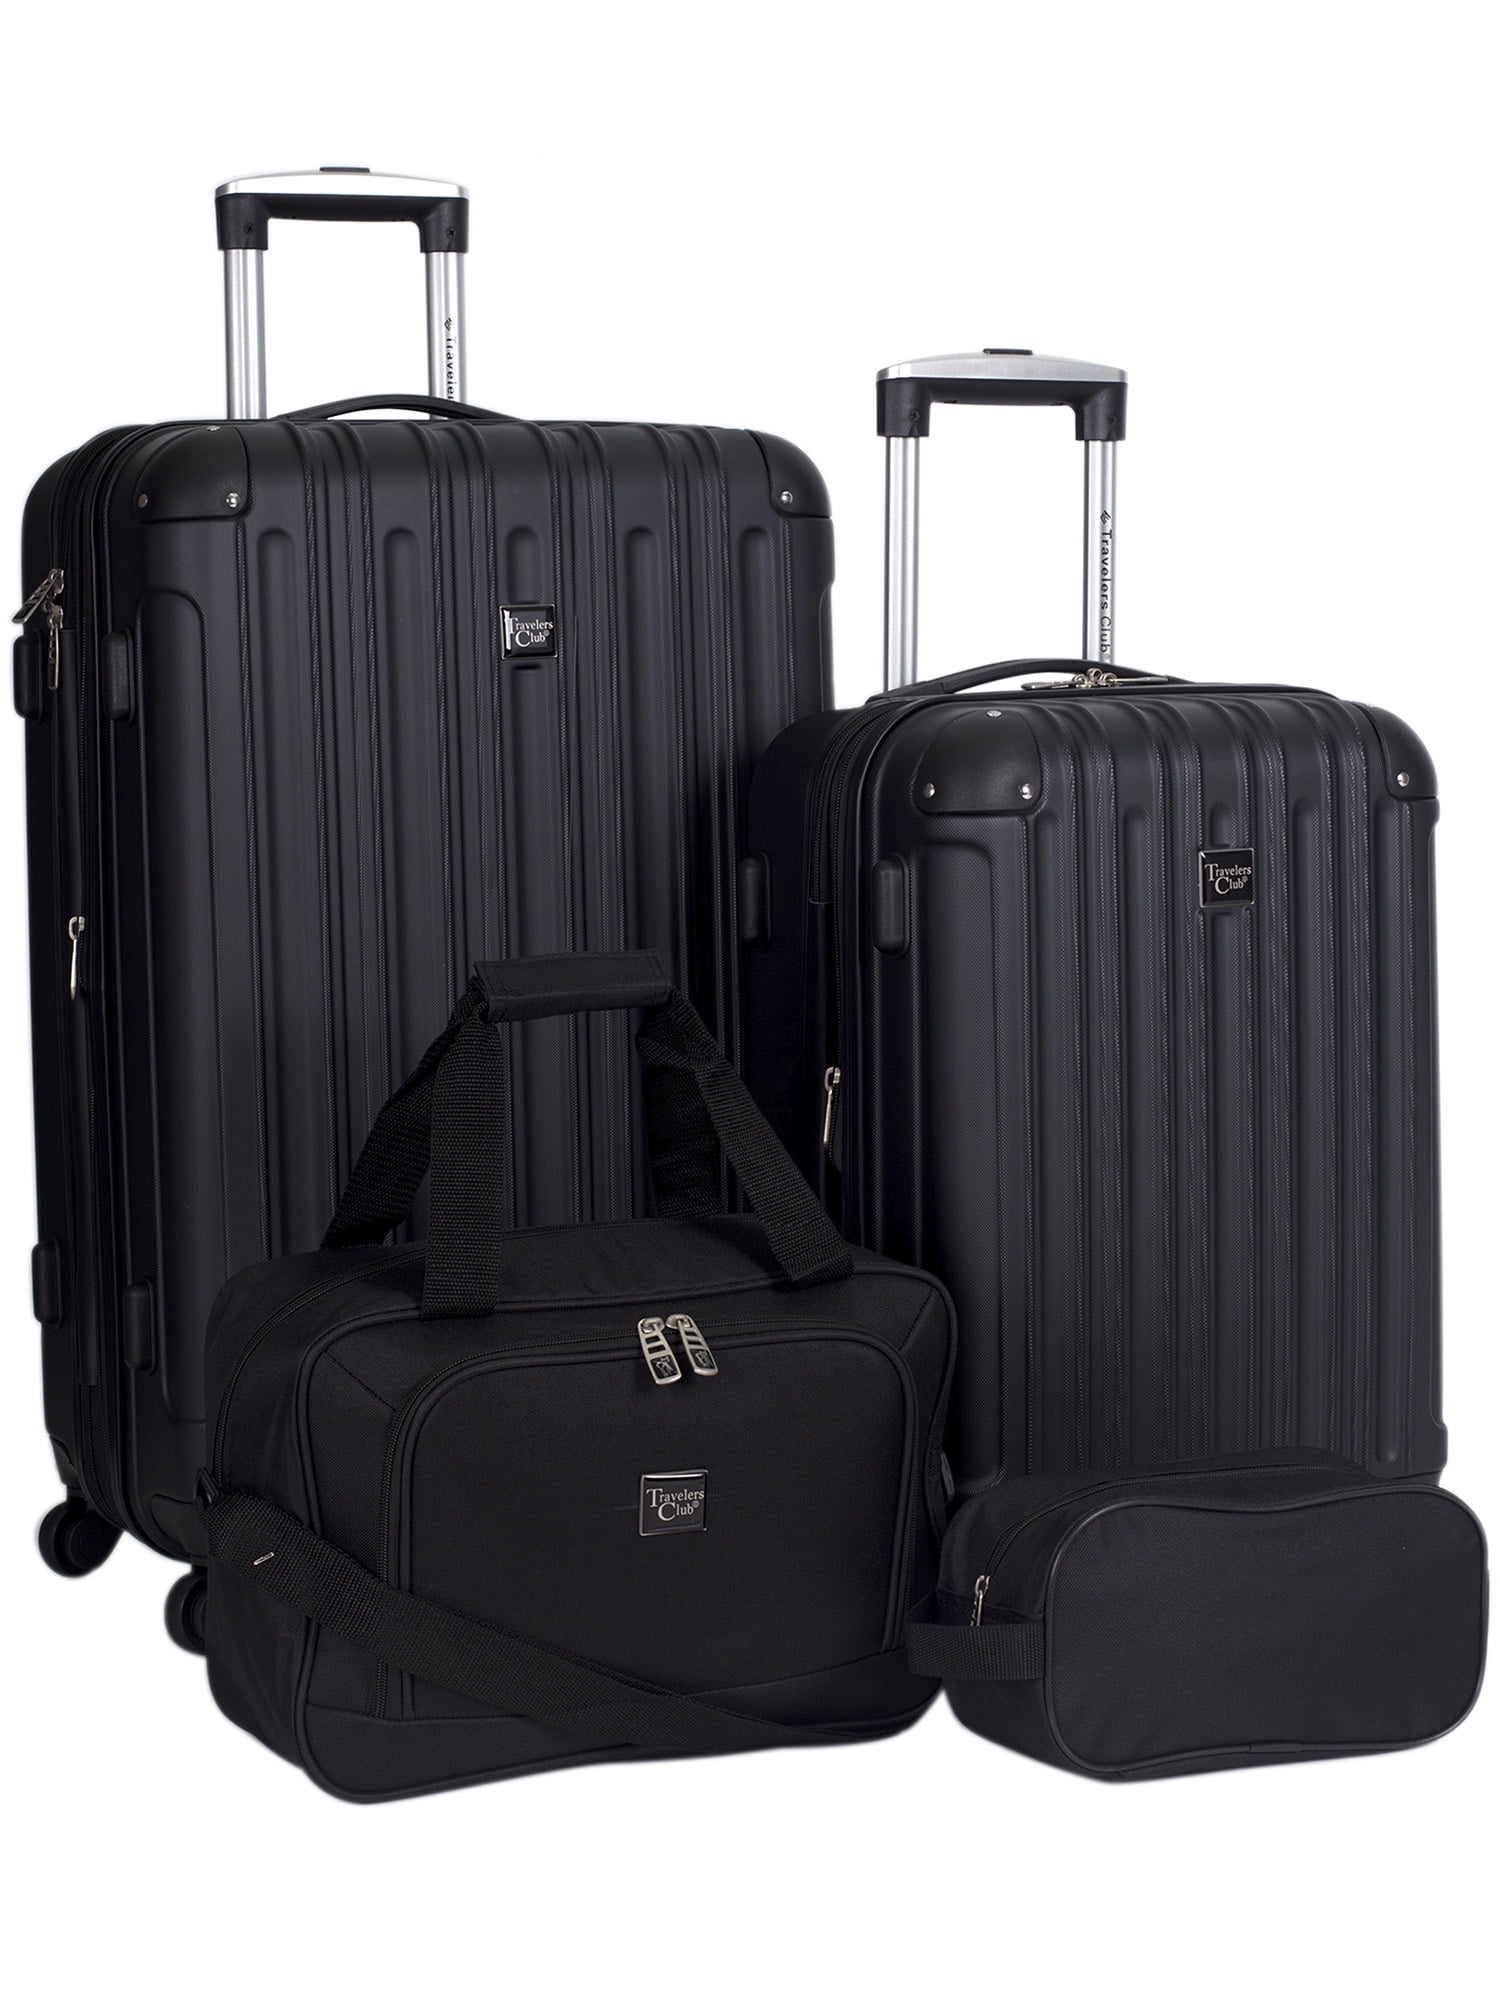 Midtown 4pc Expandable Hardside Luggage Value Set, Black - Walmart.com